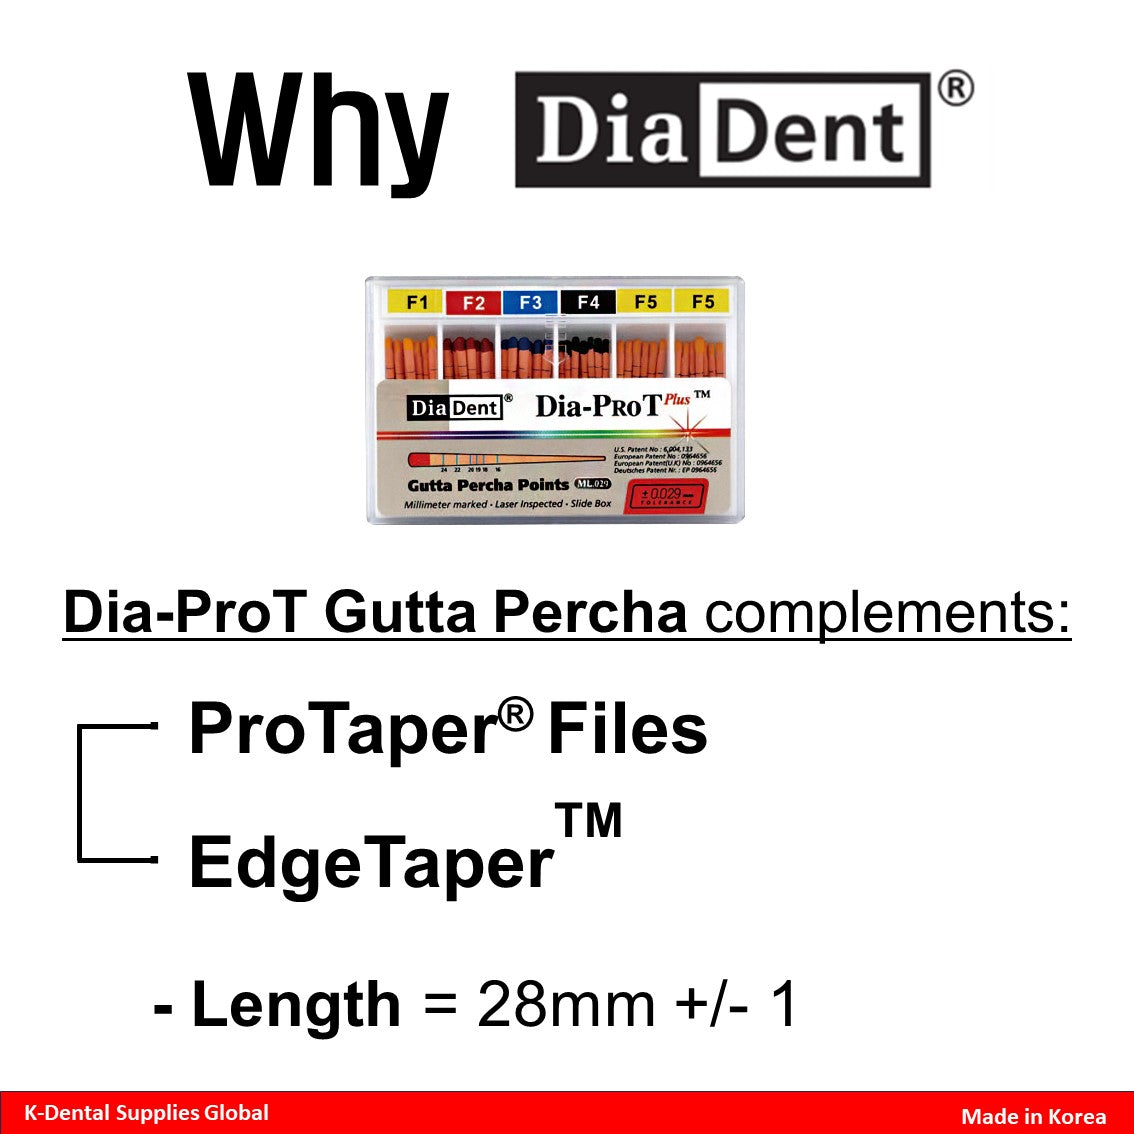 Dia-ProT Dental Millimeter Marked Gutta Percha Points